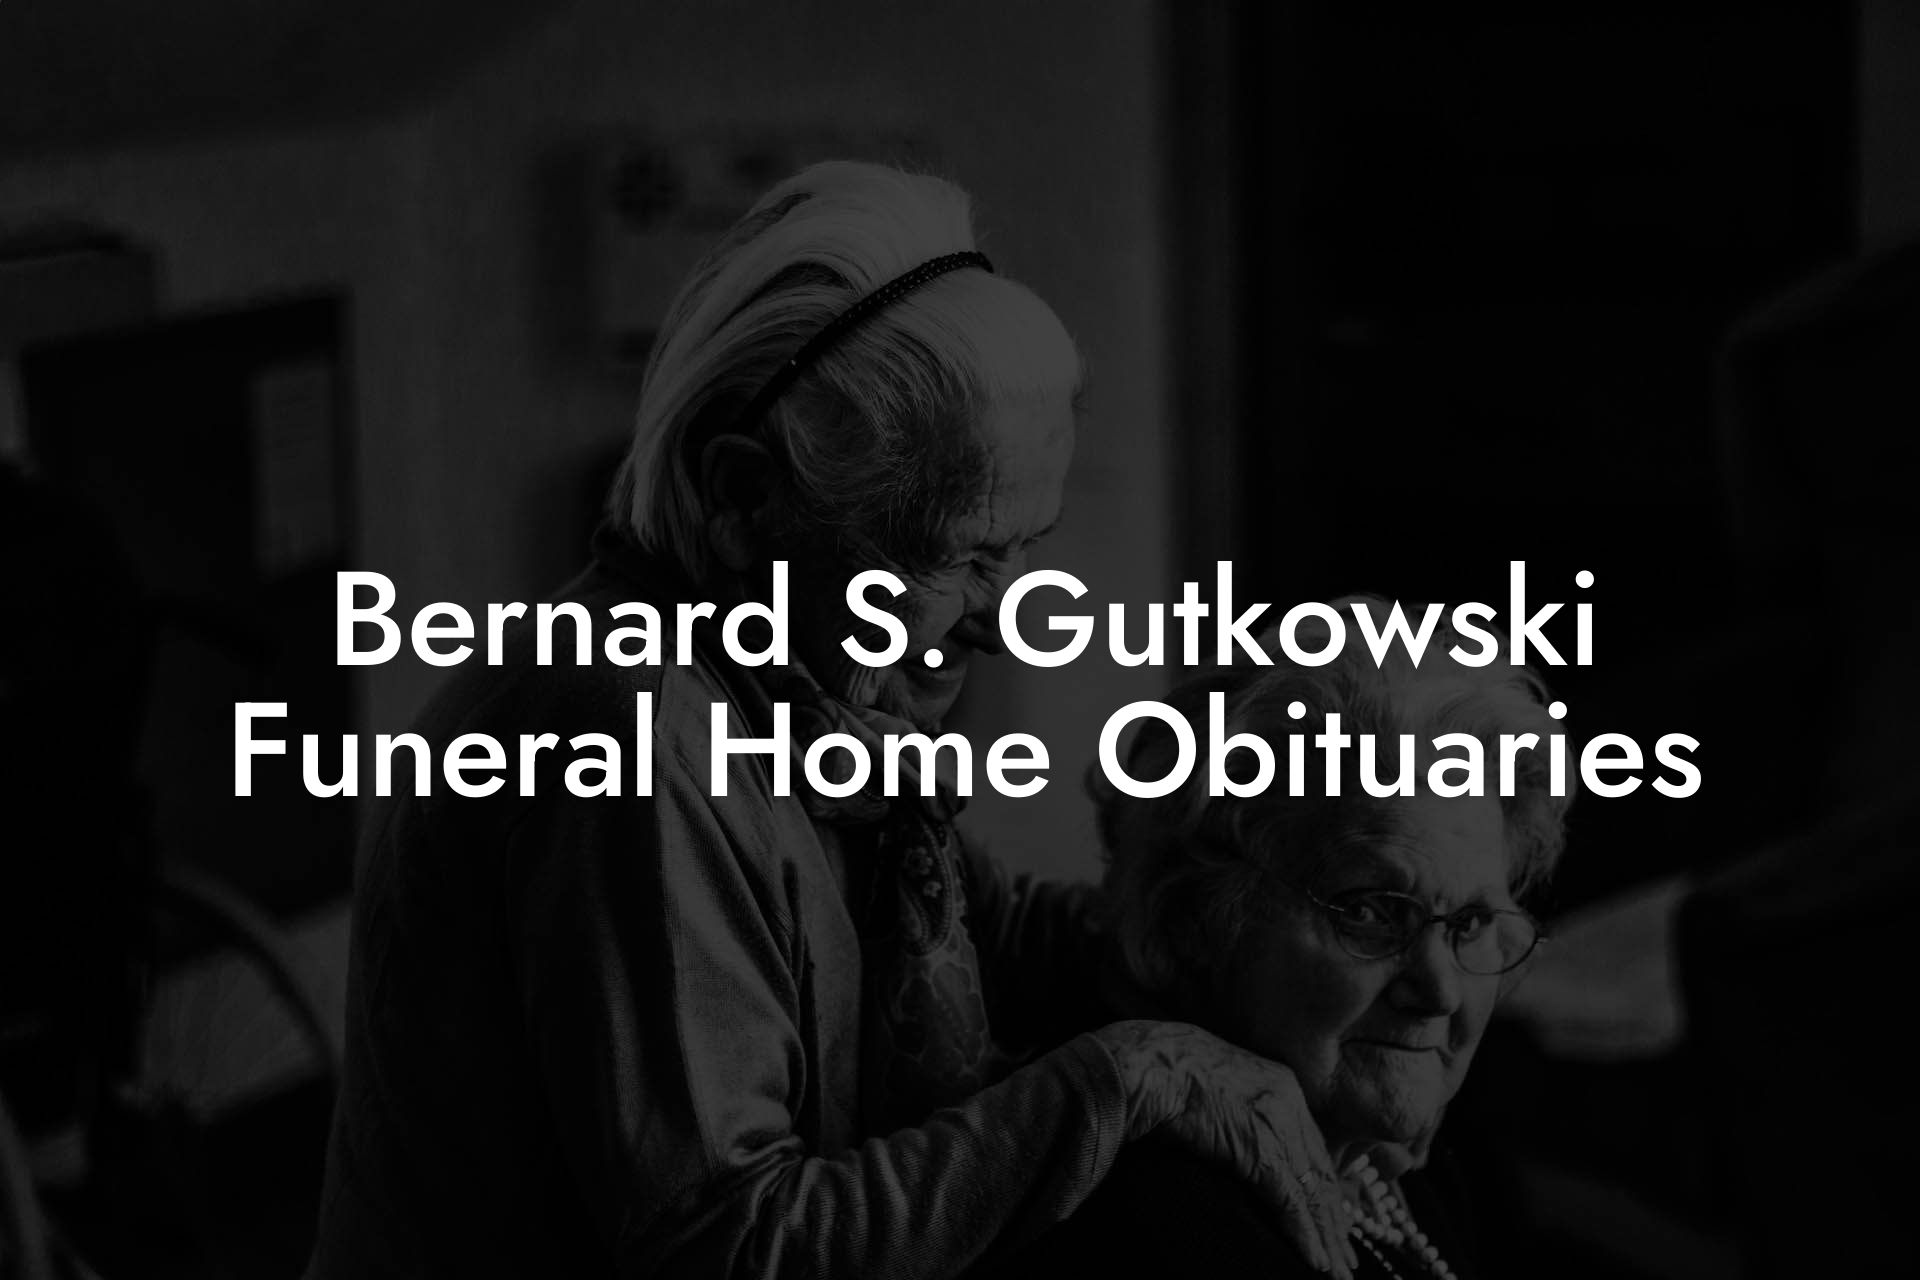 Bernard S. Gutkowski Funeral Home Obituaries